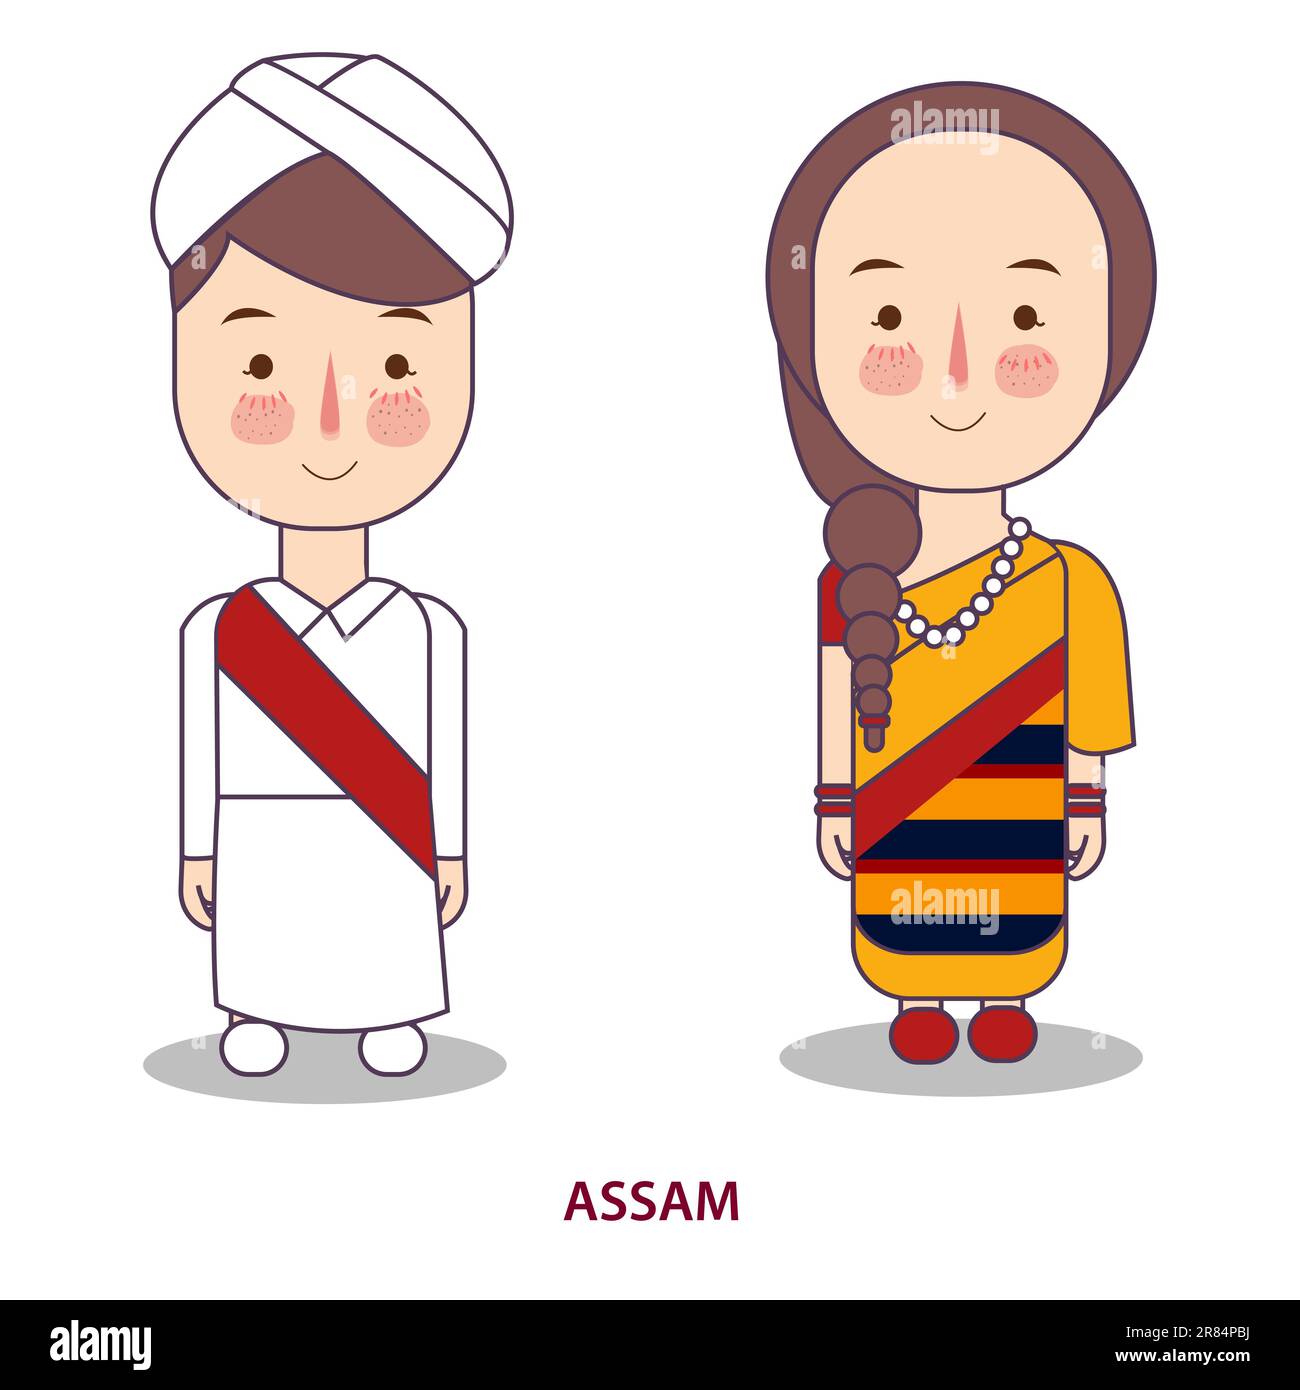 Dancing Assamese couple Stock Illustration by ©stockillustration #64620495